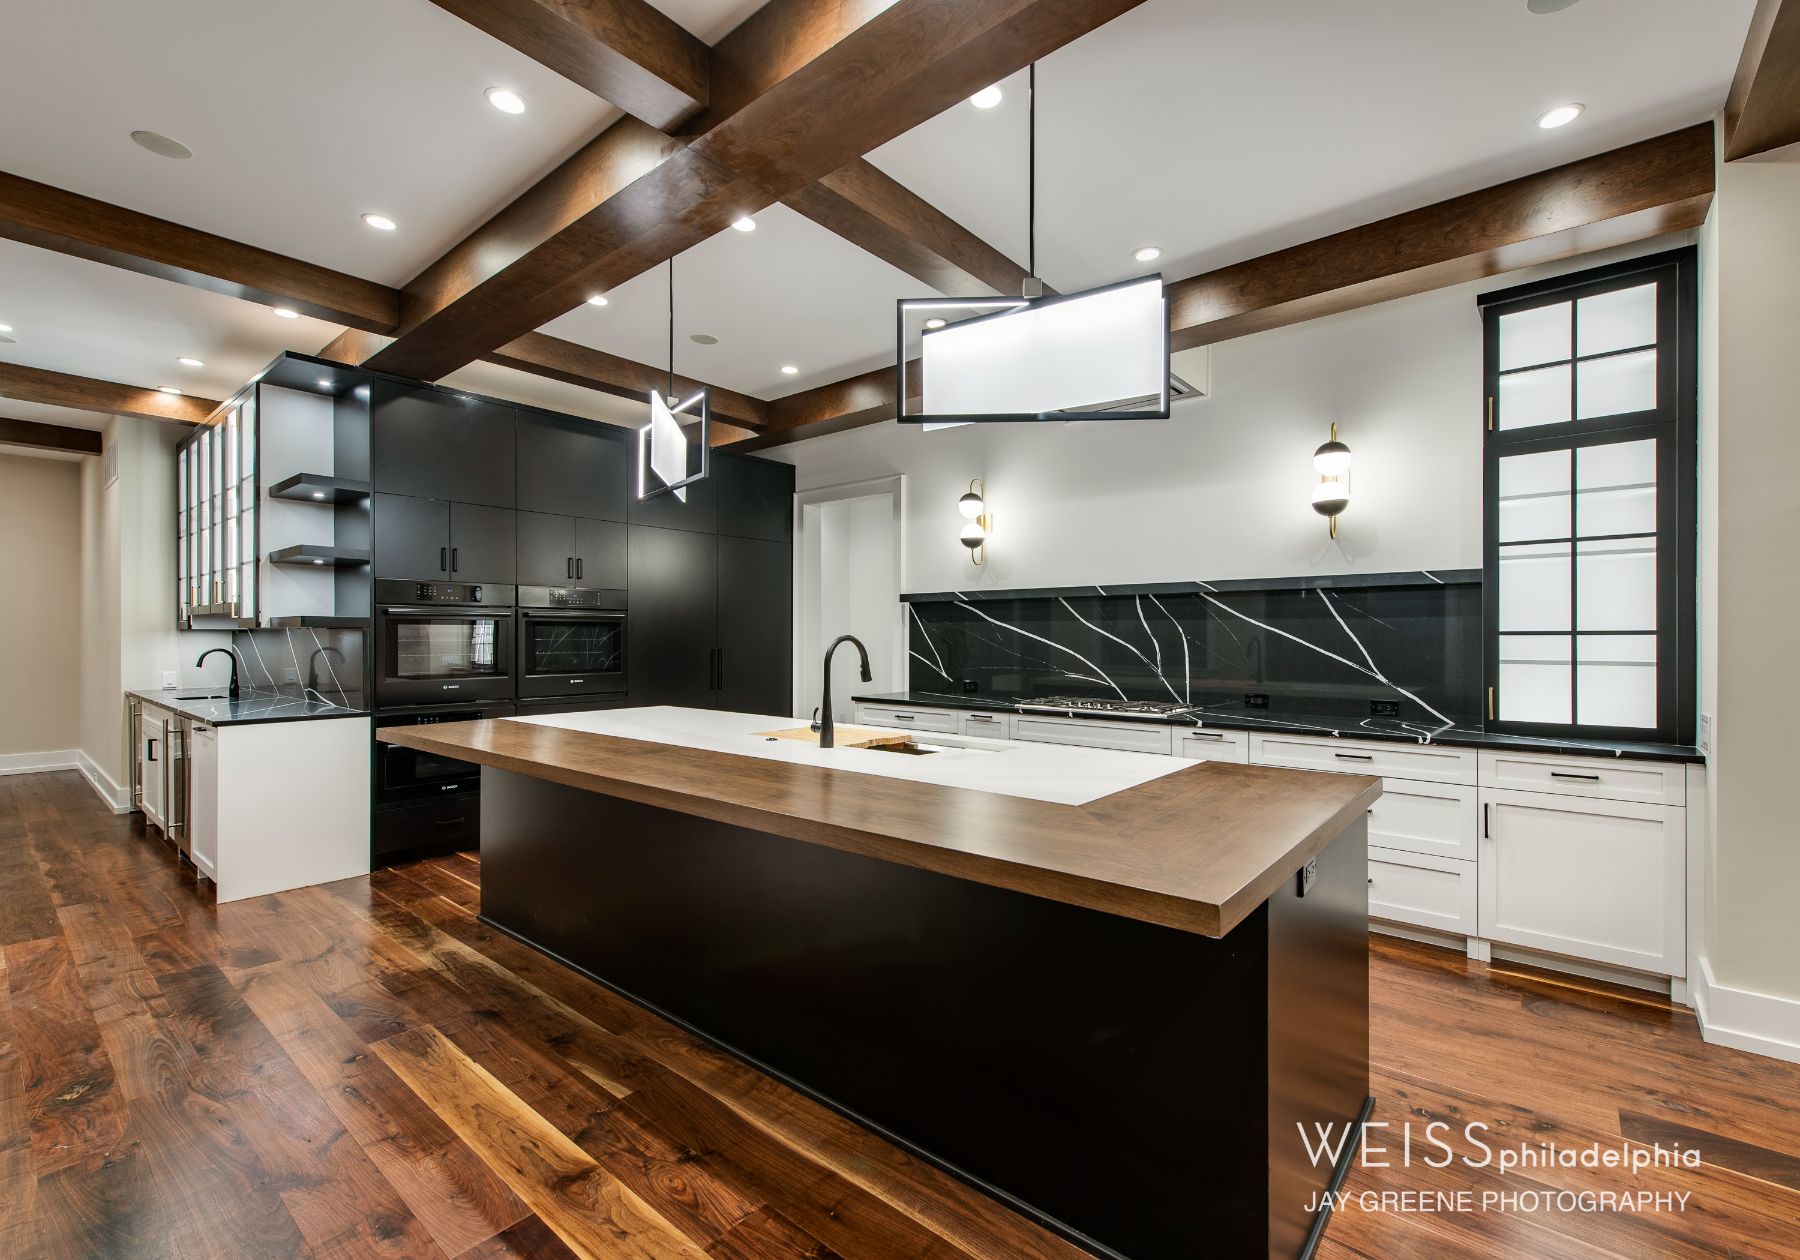 best custom homes wayne pa - design home studios - custom kitchen - wood countertops - exposed beams - black backsplash - white lights